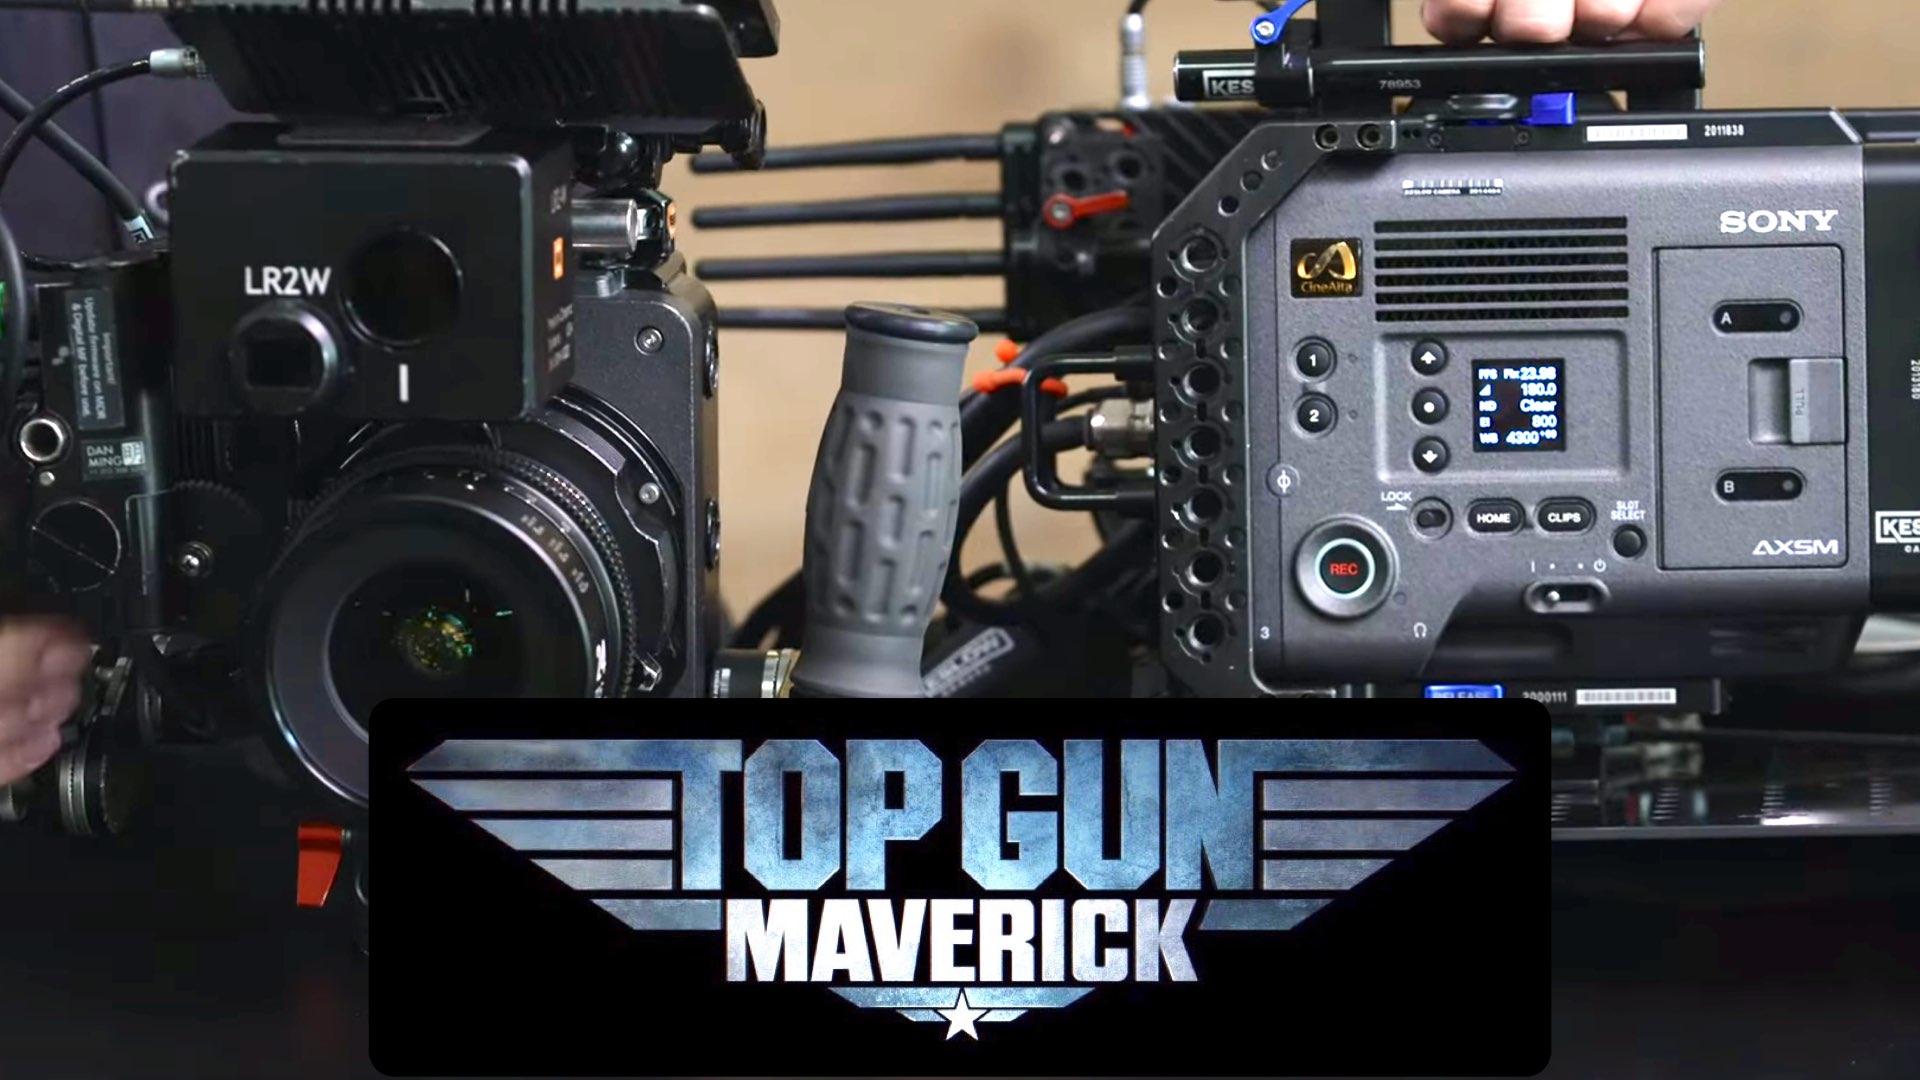 Sony Cine Presents: From VENICE to Rialto - The ’ Top Gun Mode’